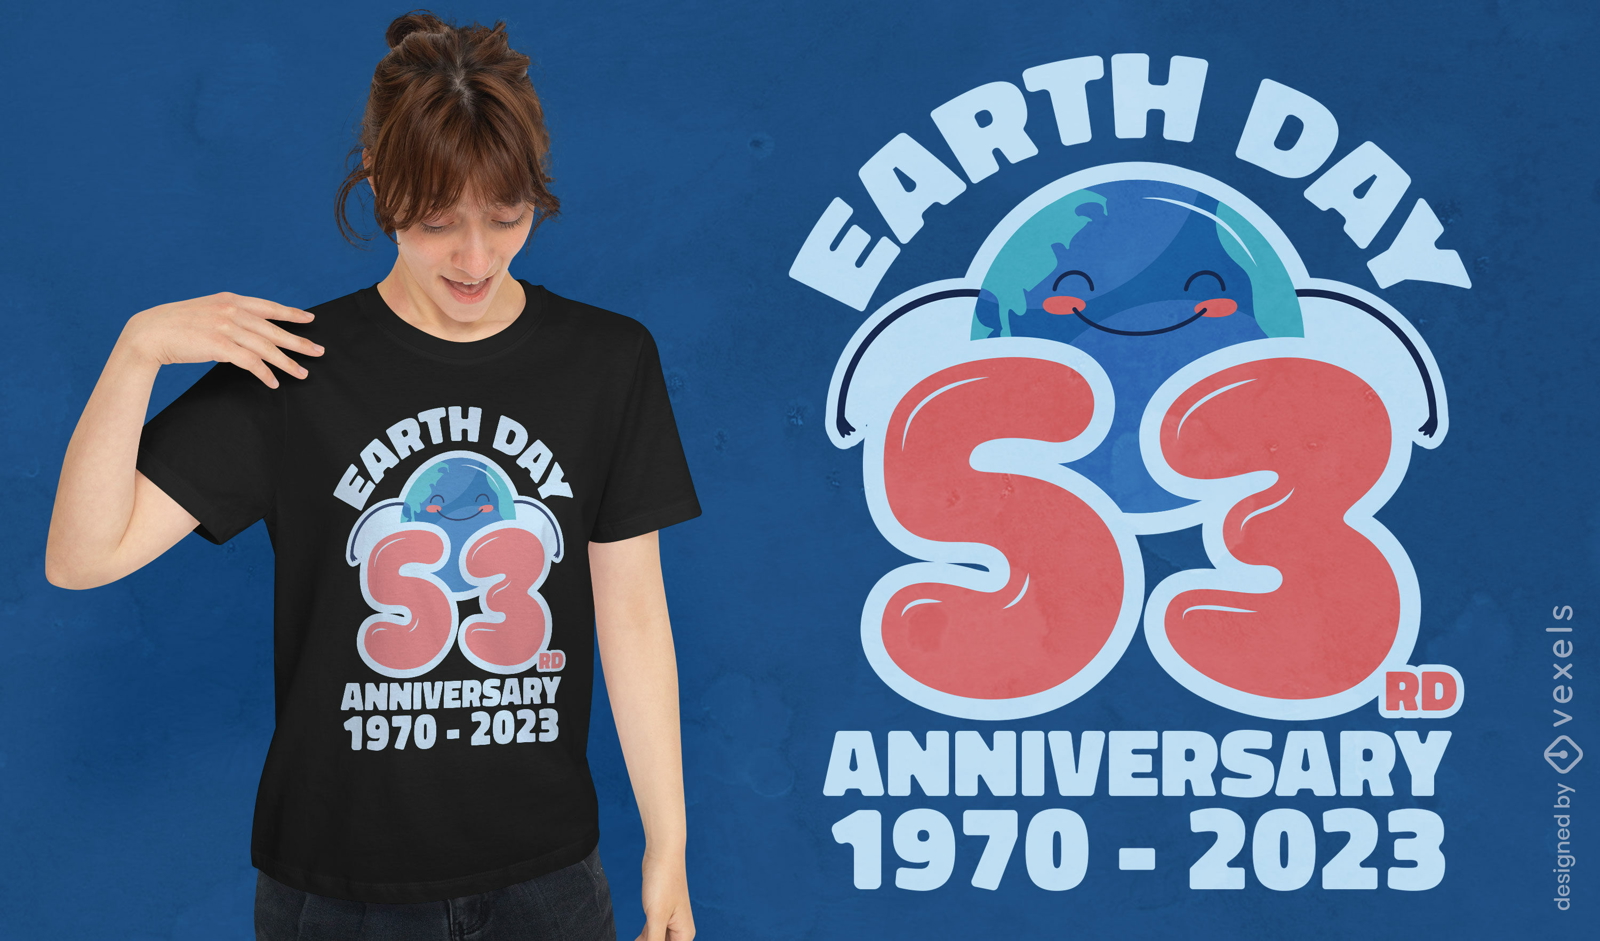 Earth 53rd anniversary t-shirt design